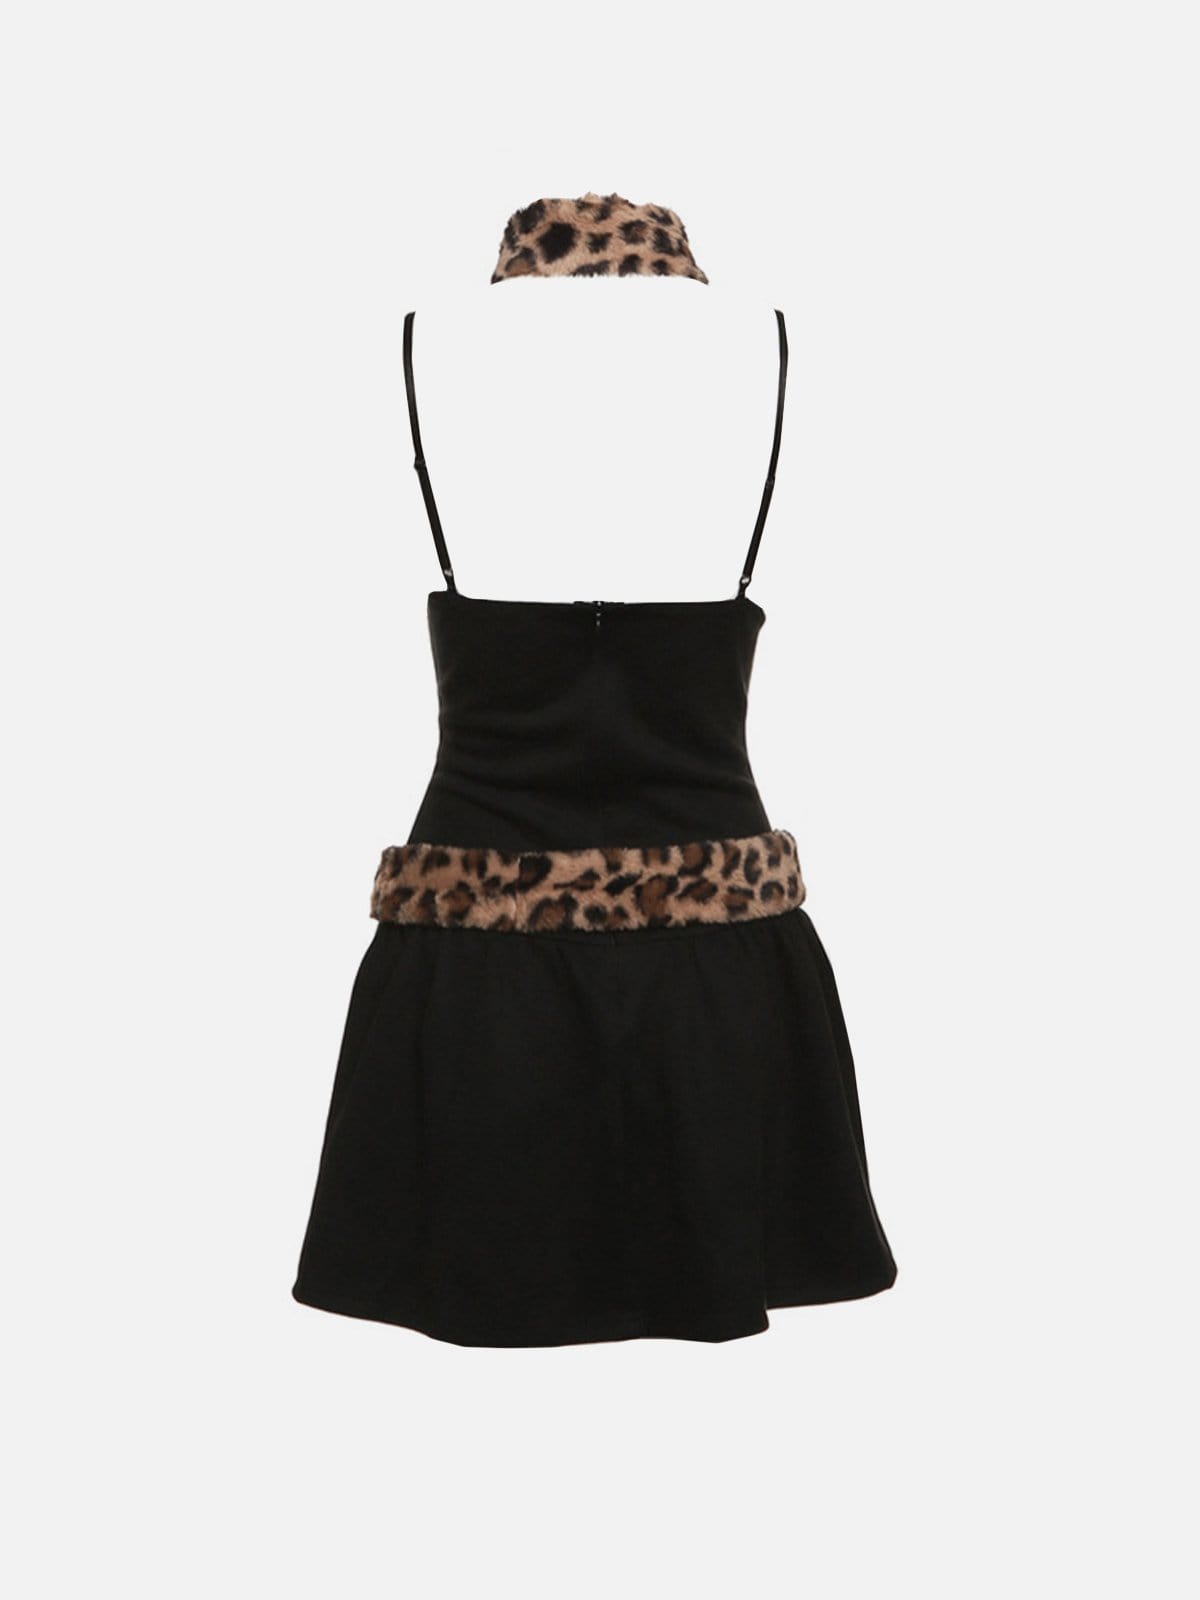 NEV Leopard Print Patchwork Dress